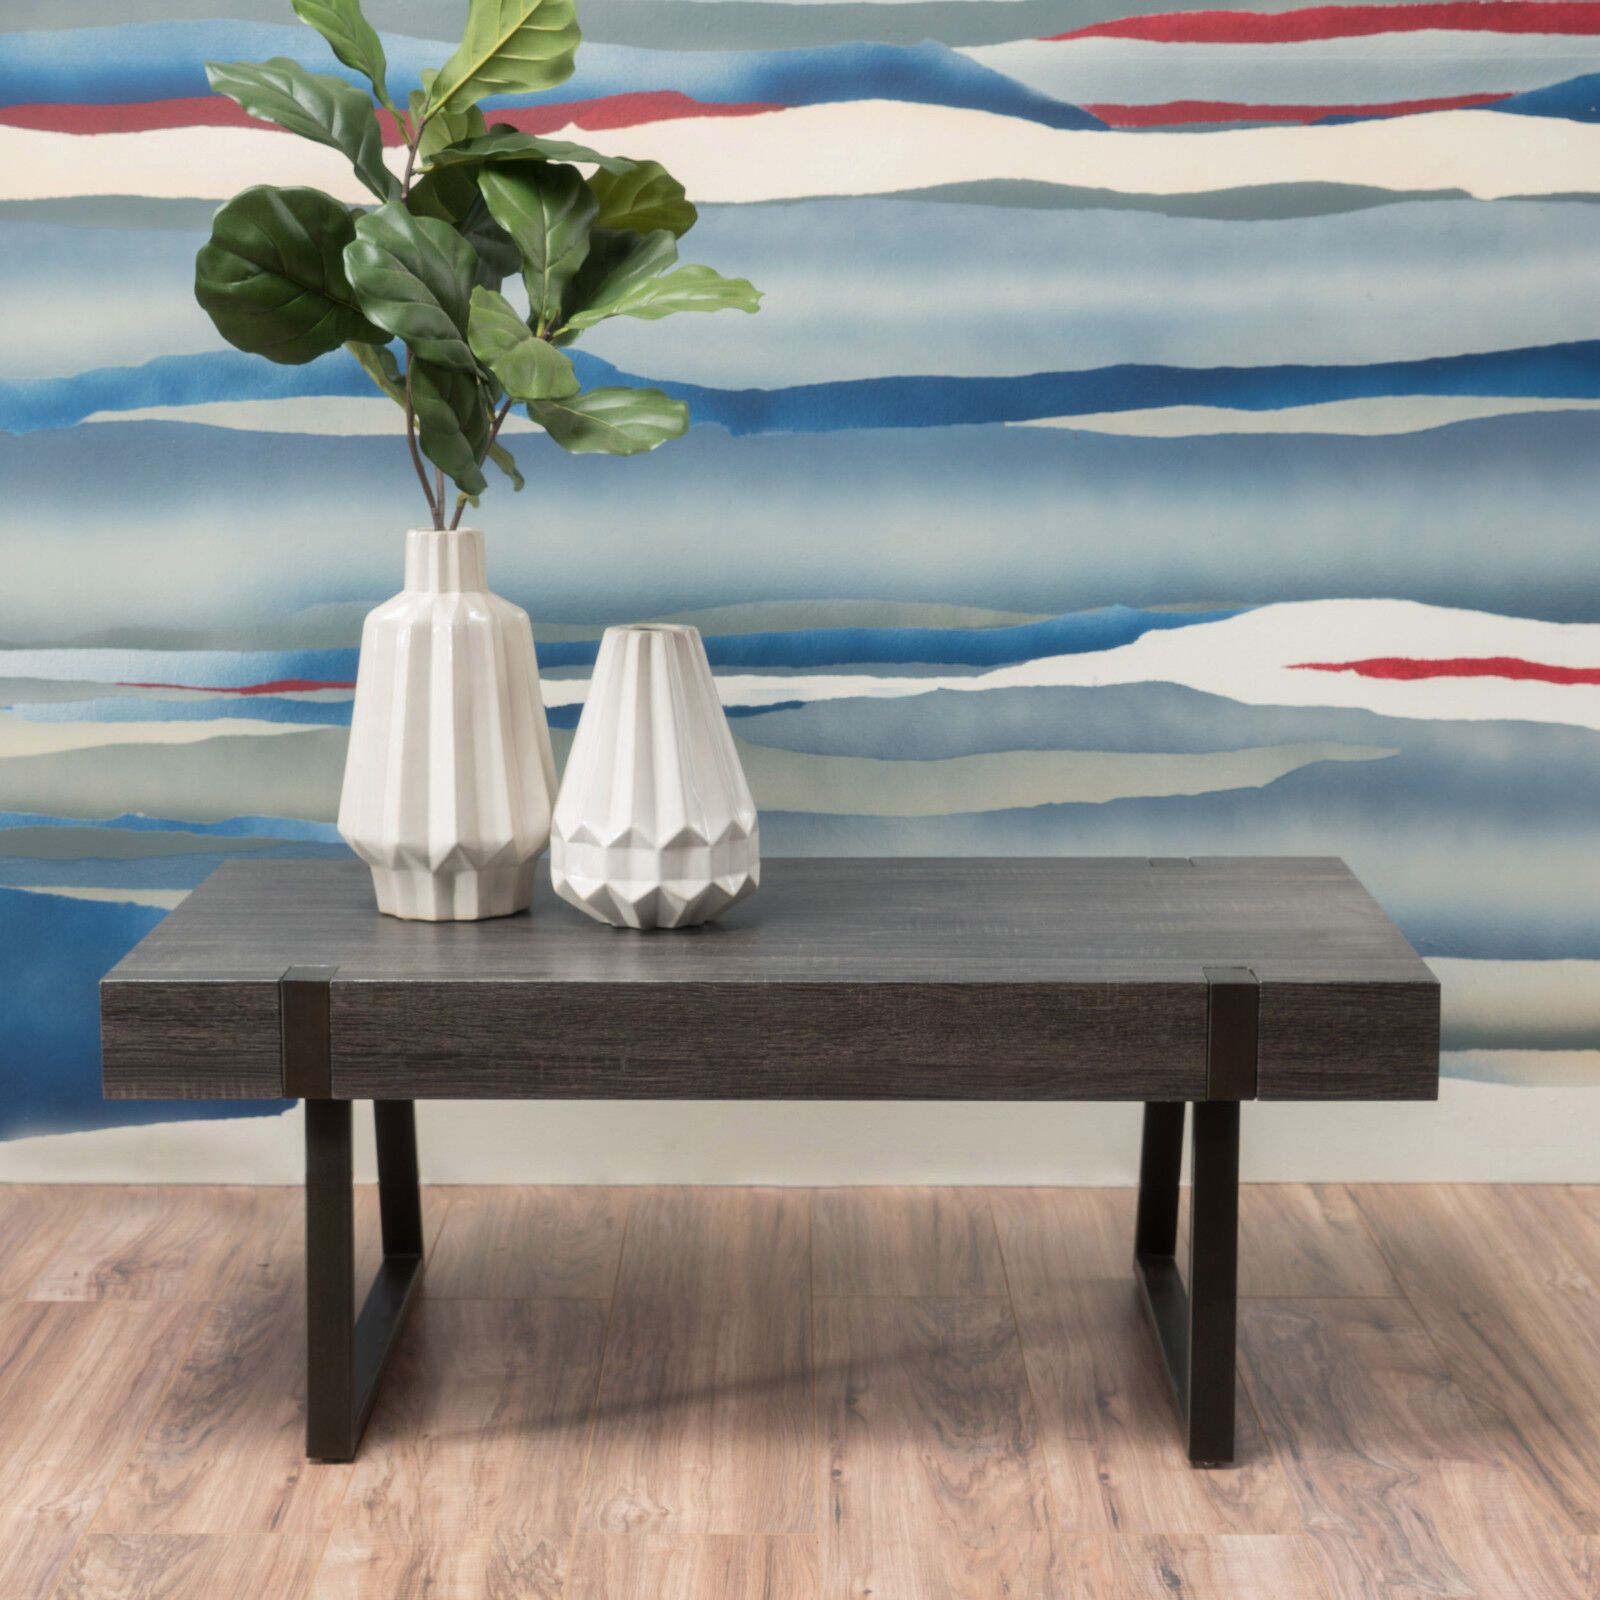 Genwa Modern Industrial Rectangular Faux Wood Coffee Table With Metal Legs  | Ebay With Regard To Industrial Faux Wood Coffee Tables (View 8 of 15)